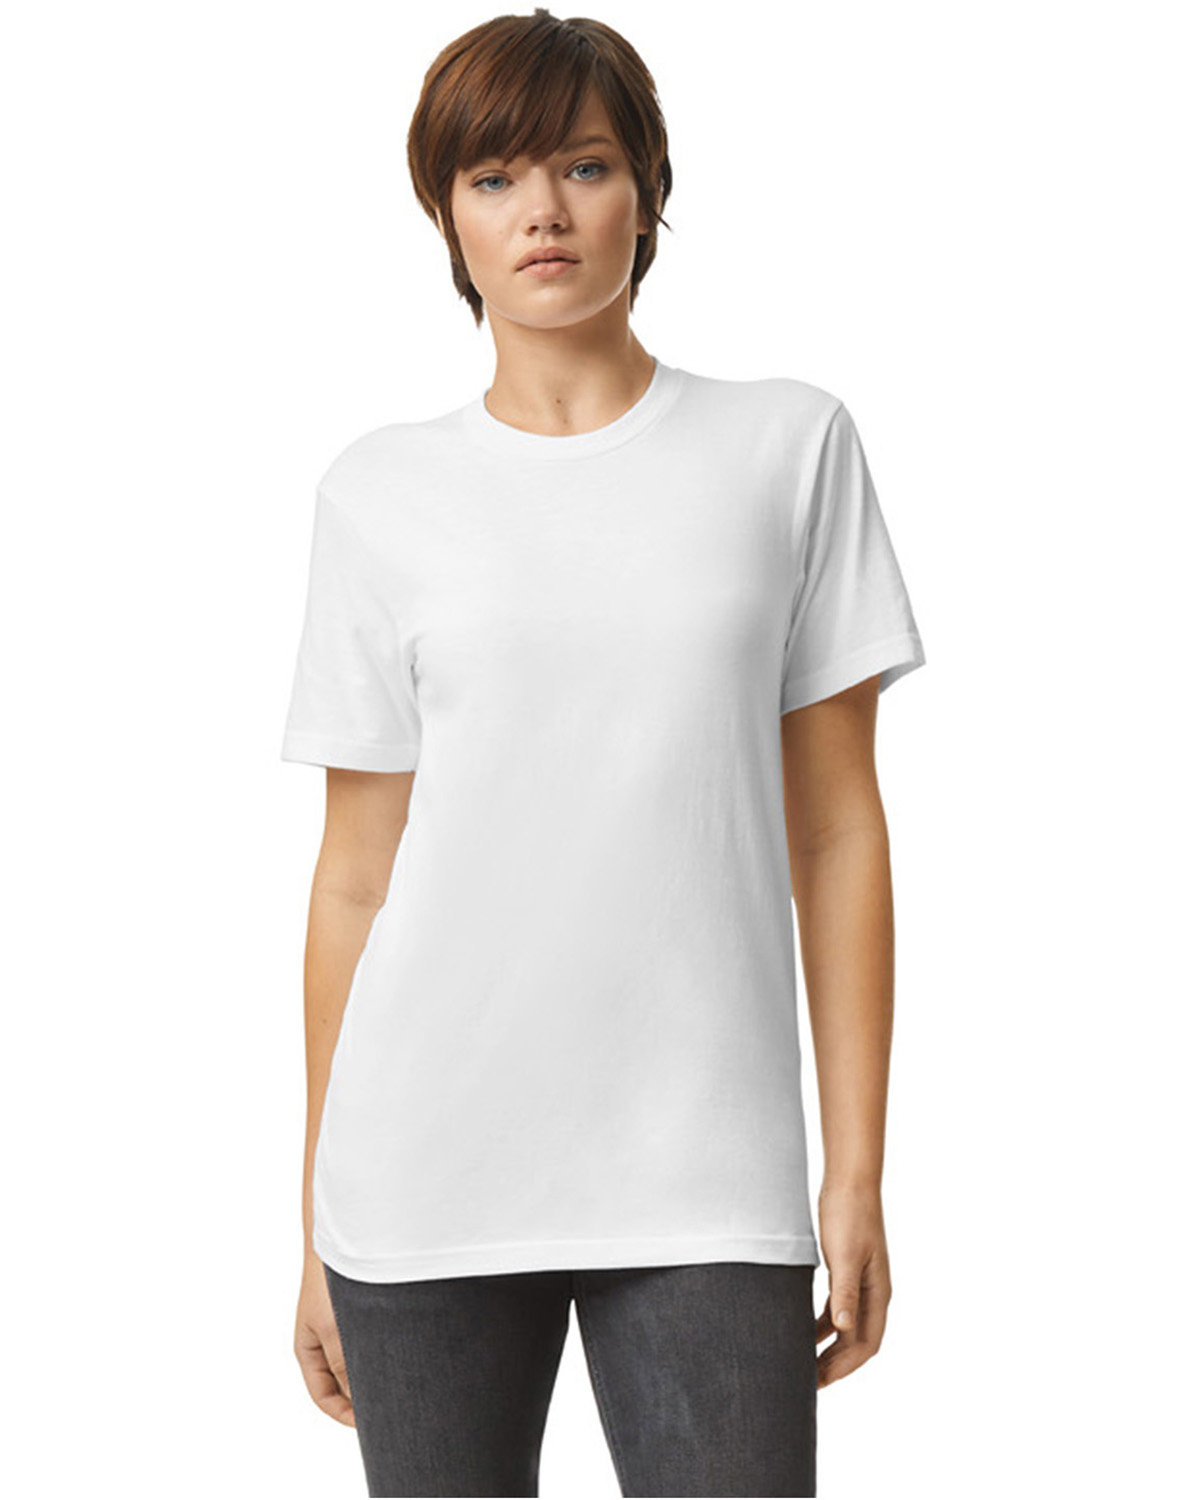 American Apparel Unisex CVC T-Shirt WHITE 